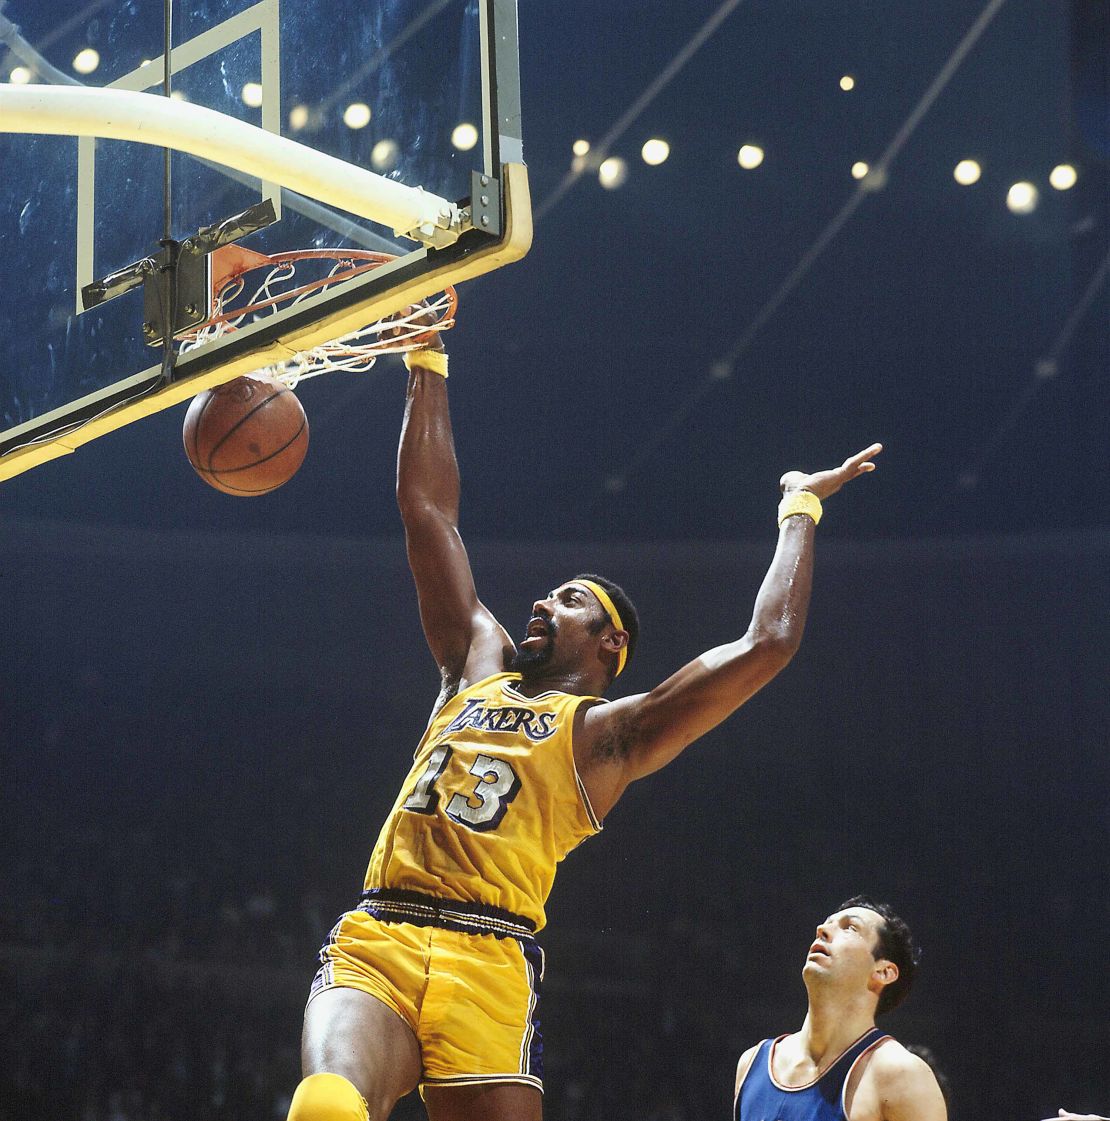 Lakers' Wilt Chamberlain dunking against the New York Knicks in 1970.